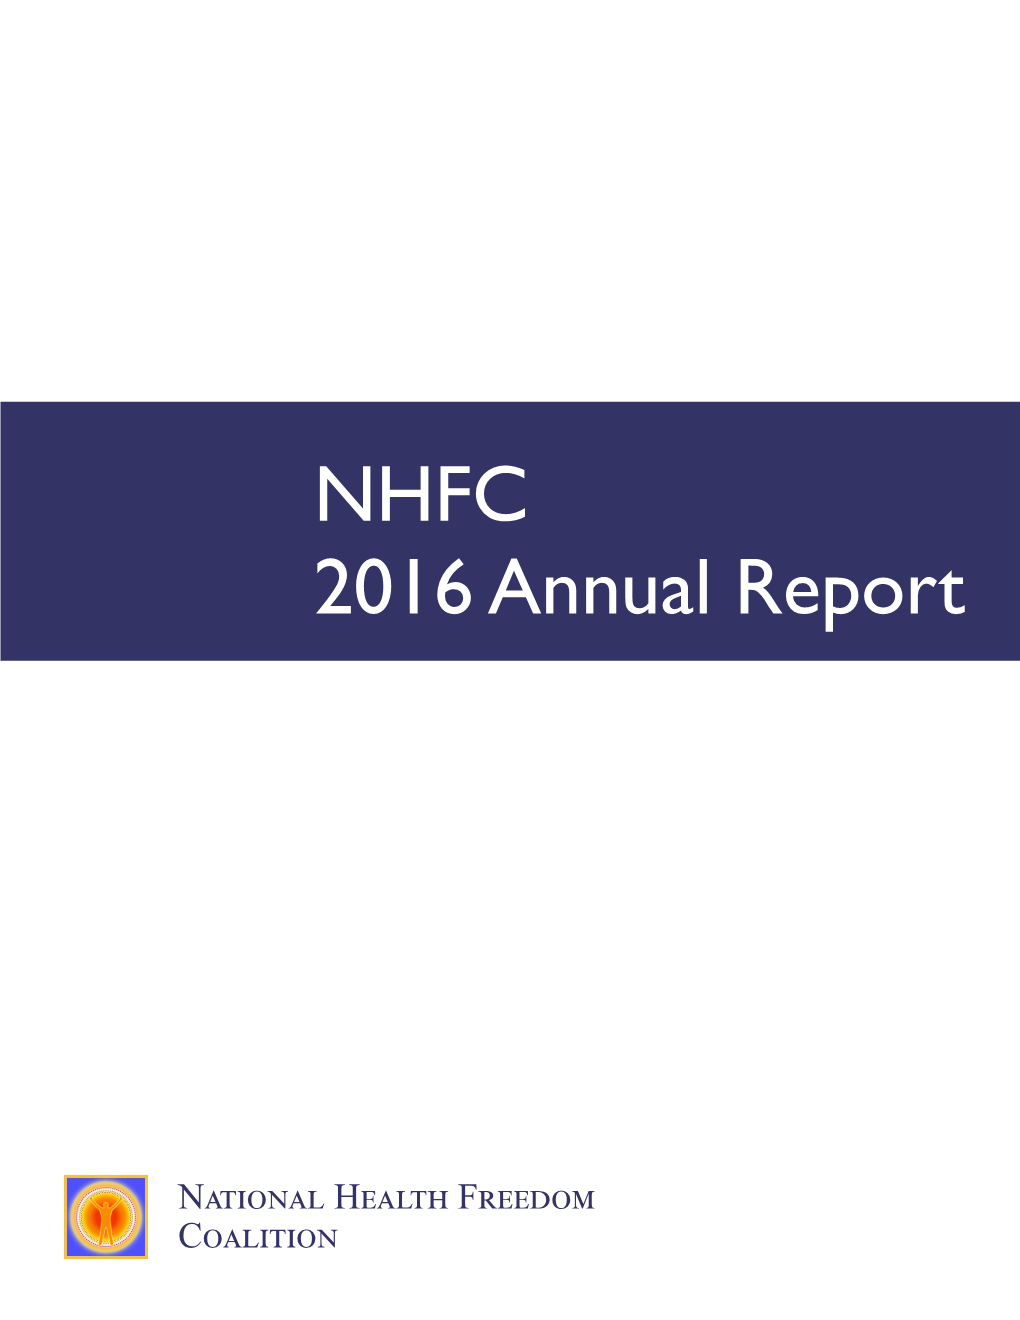 NHFC Annual Report 2016